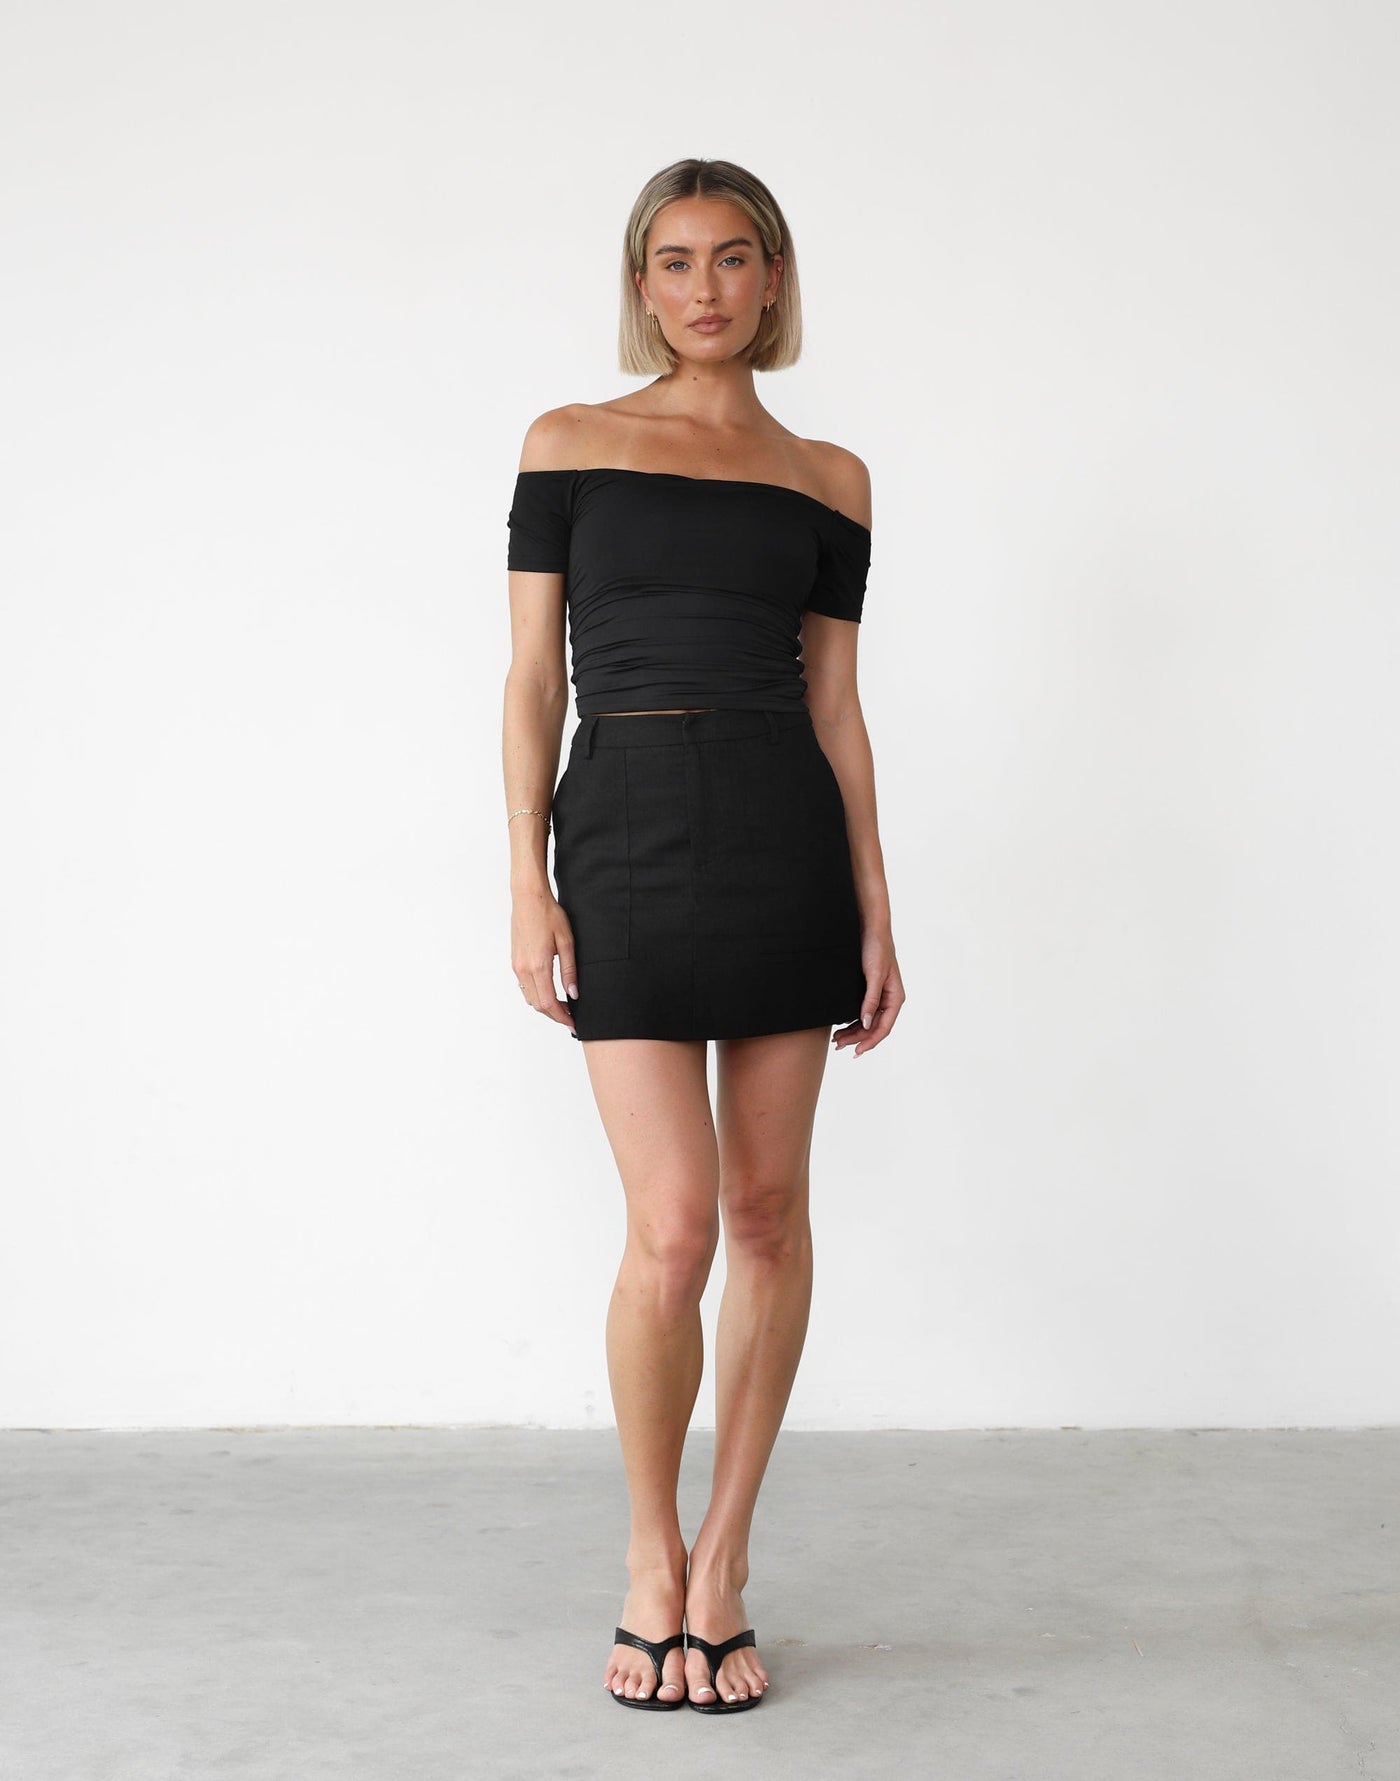 Leena Top (Black) | Charcoal Clothing Exclusive - One Shoulder Asymmetrical Hem Top - Women's Top - Charcoal Clothing